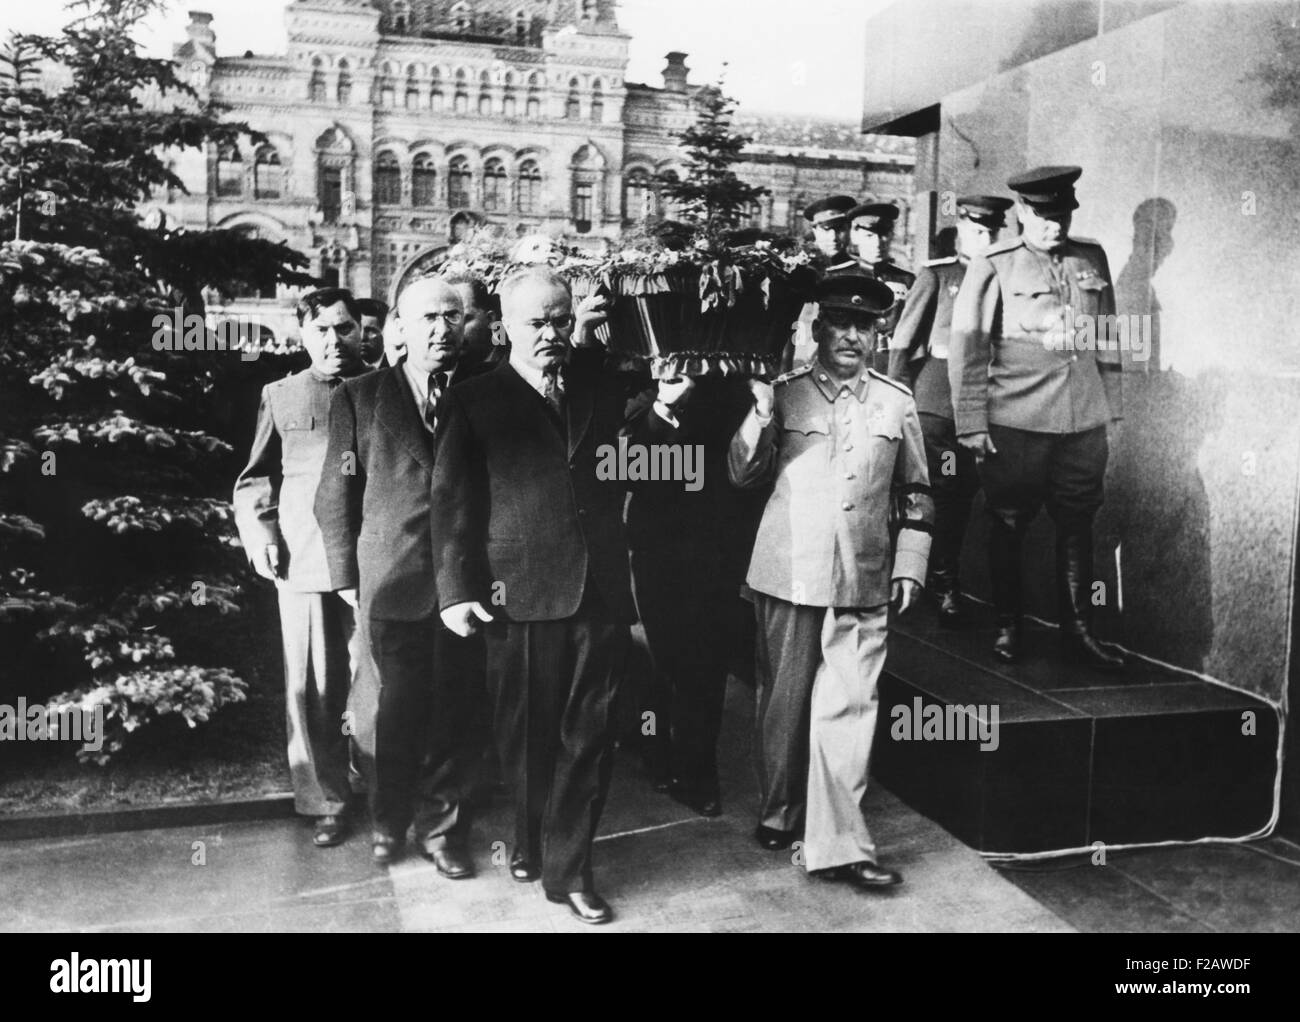 Josep Stalin and V.M. Molotov were the head pallbearers for Kalinin. Soviet President Mikhail I. Kalinin died in June 1946. On left are Georgy Malenkov and Lavrentiy Beria. (CSU 2015 11 1385) Stock Photo